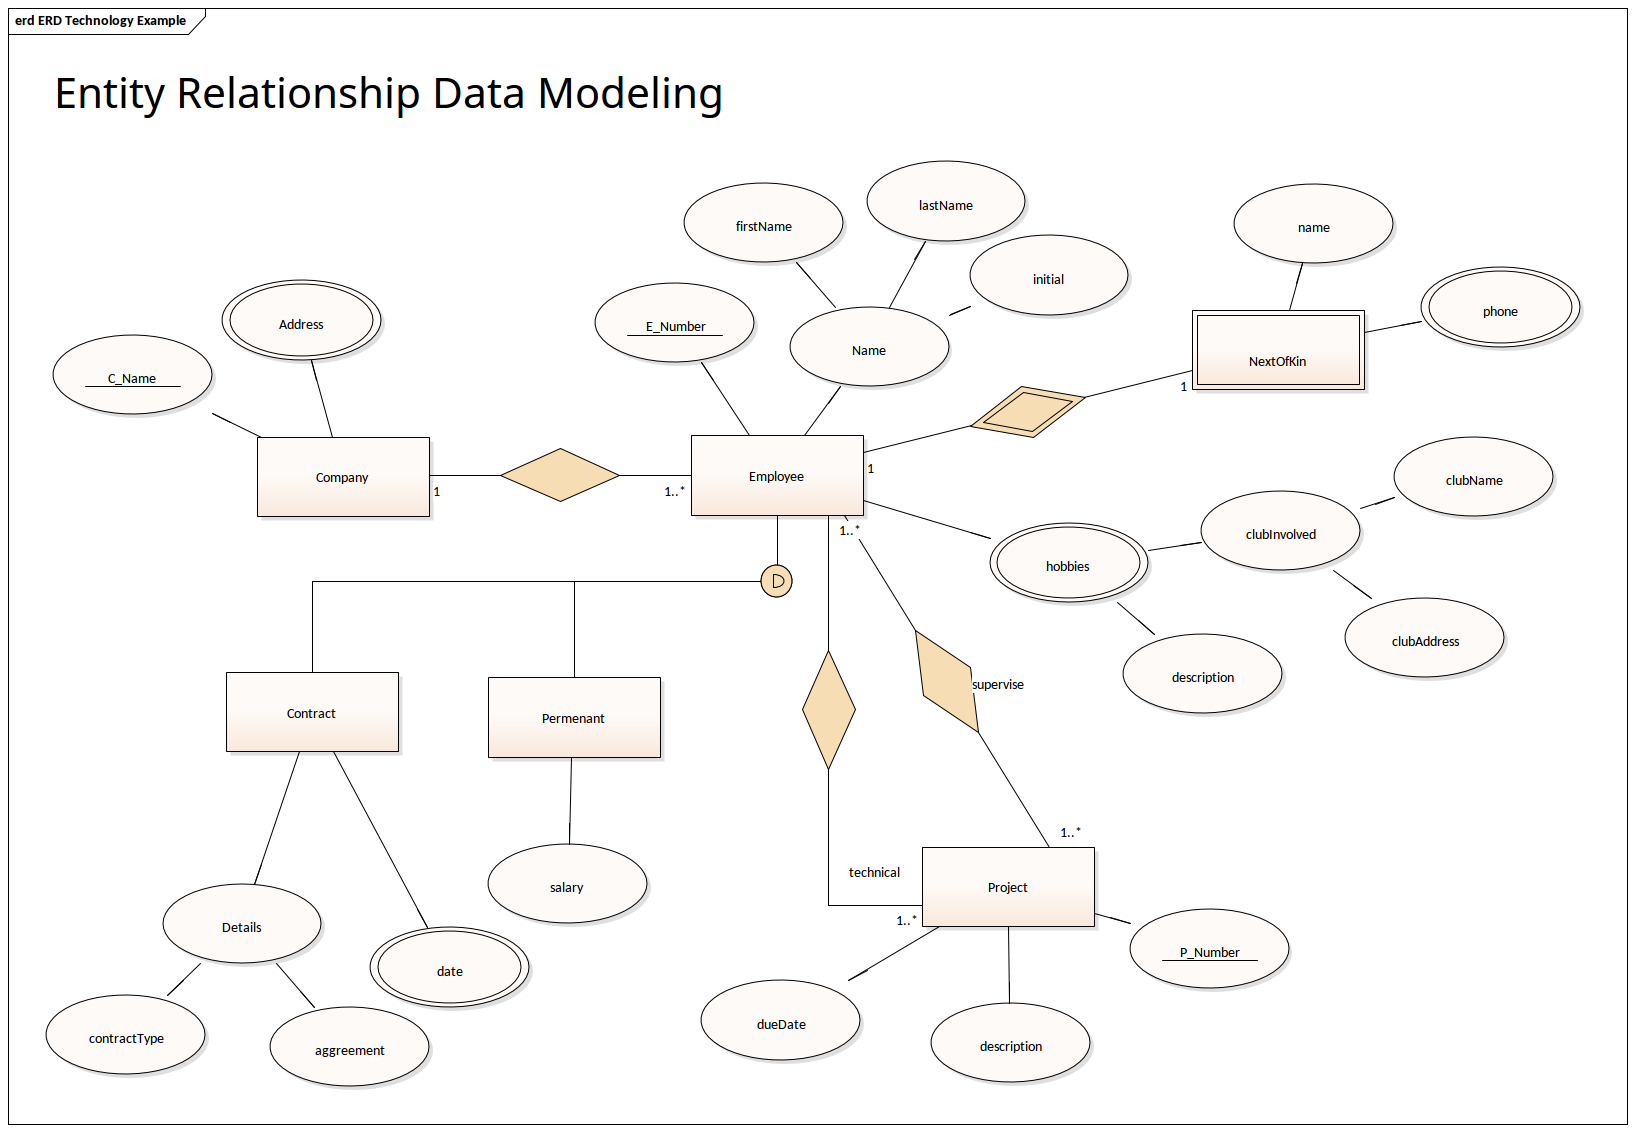 Entity Relationship Data Modeling | Enterprise Architect intended for Enterprise Relationship Diagram